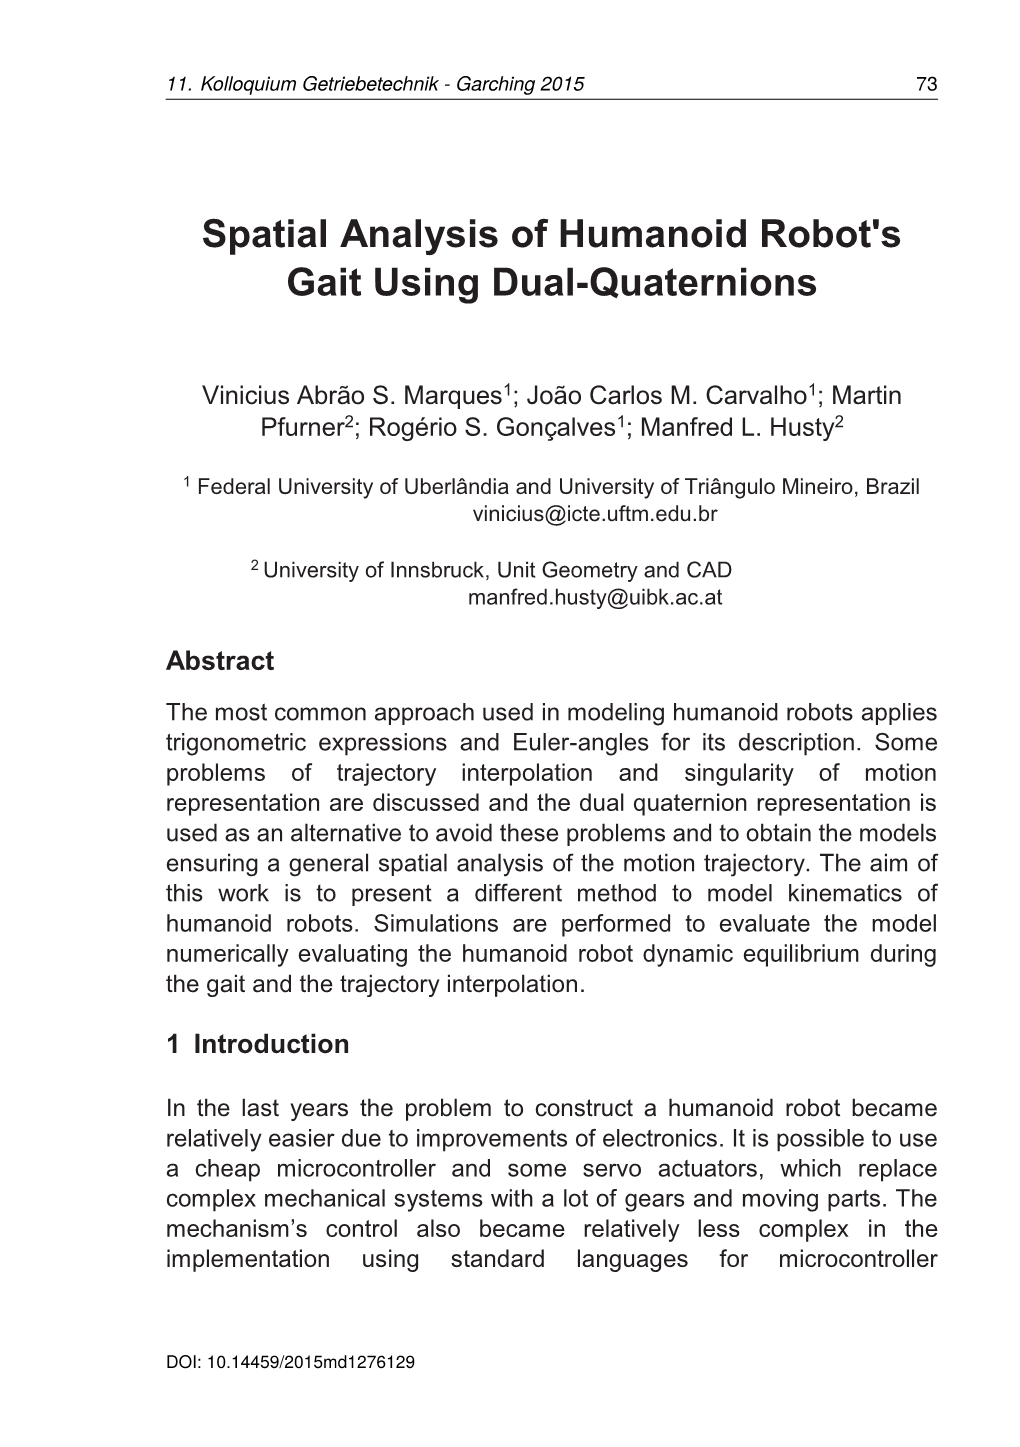 Spatial Analysis of Humanoid Robot's Gait Using Dual-Quaternions